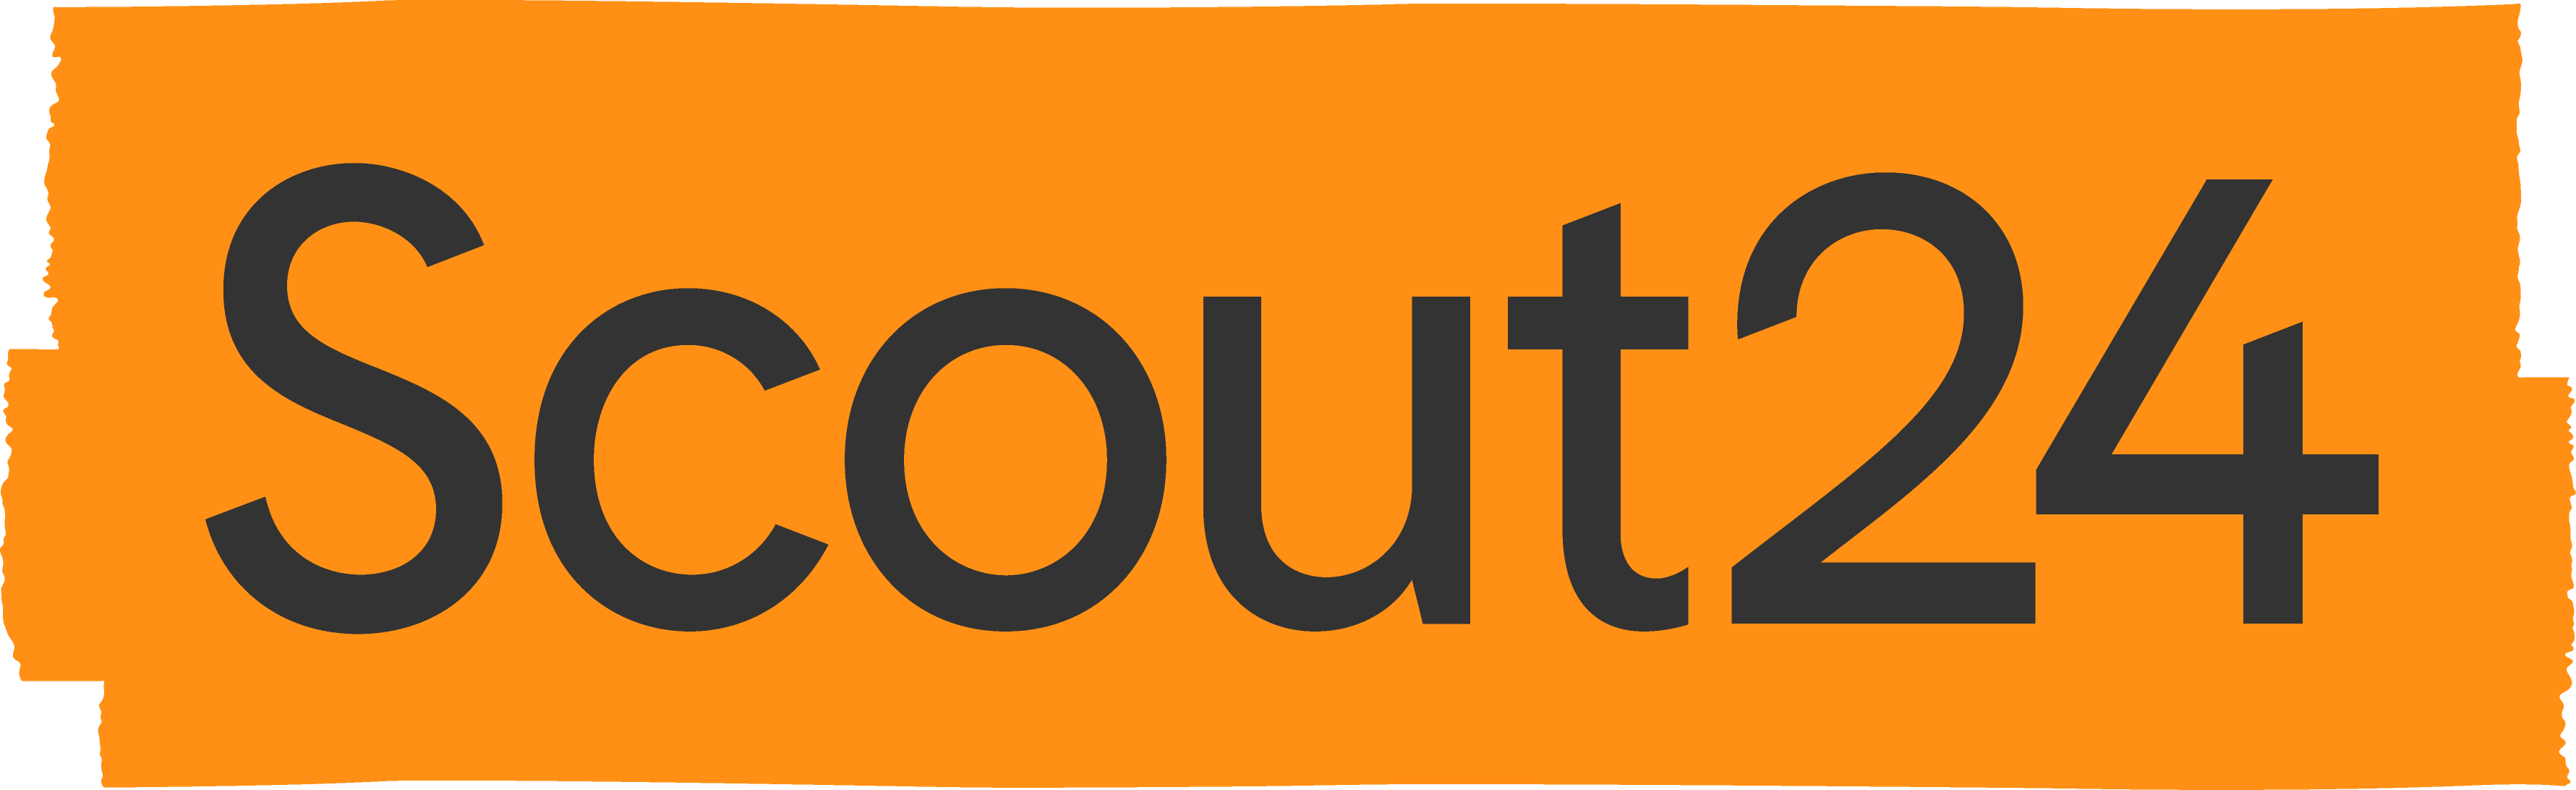 Scout24 Logo-image